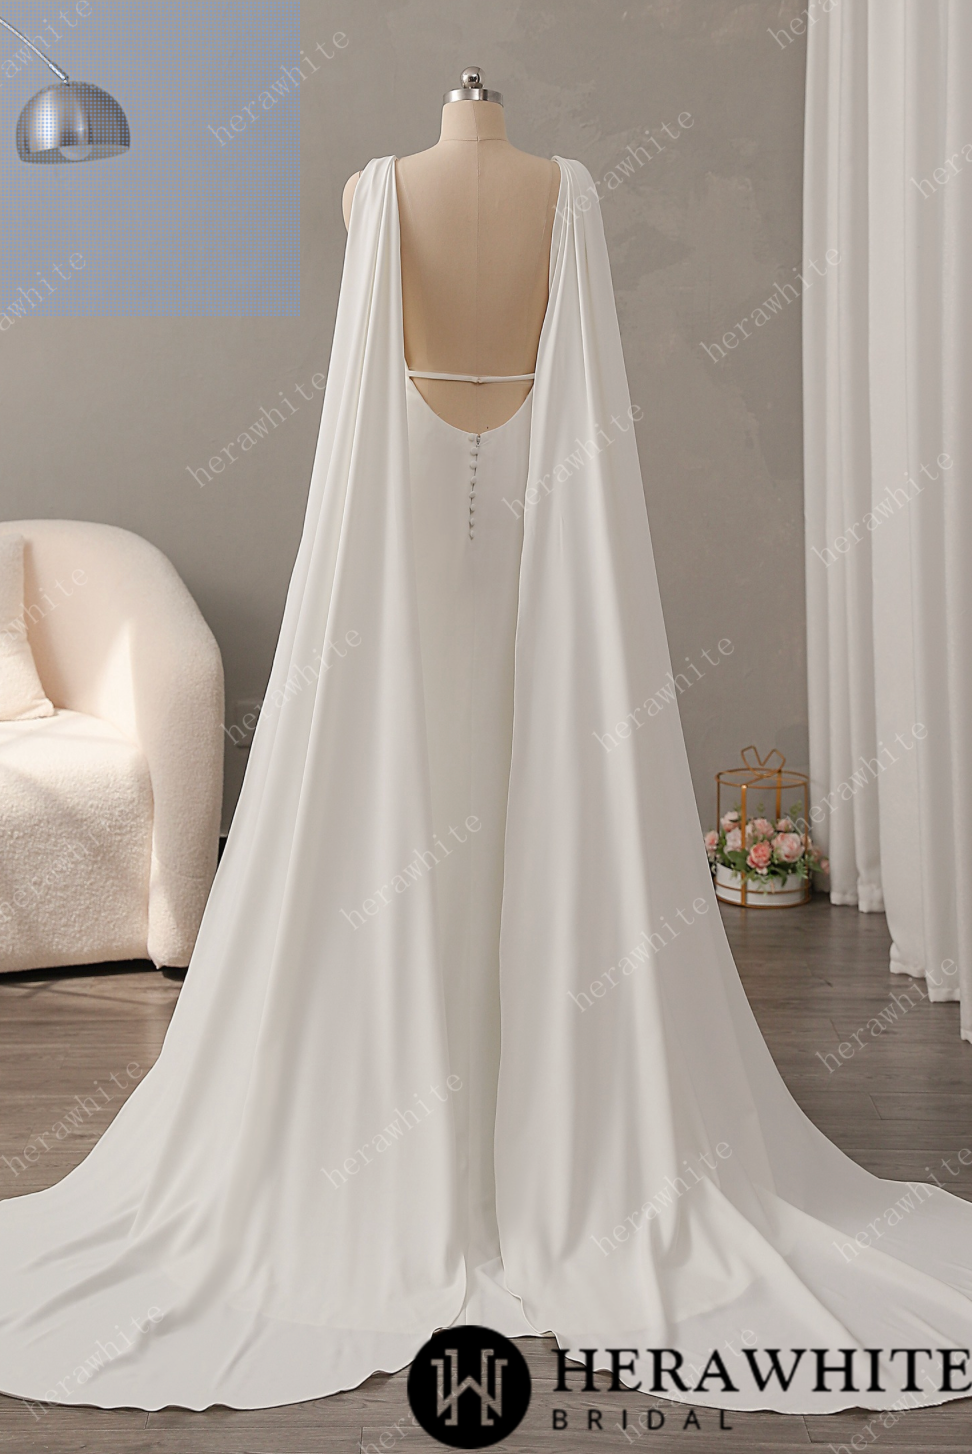 Crepe Wedding Dress with Detachable Cape - Nolita Nicole